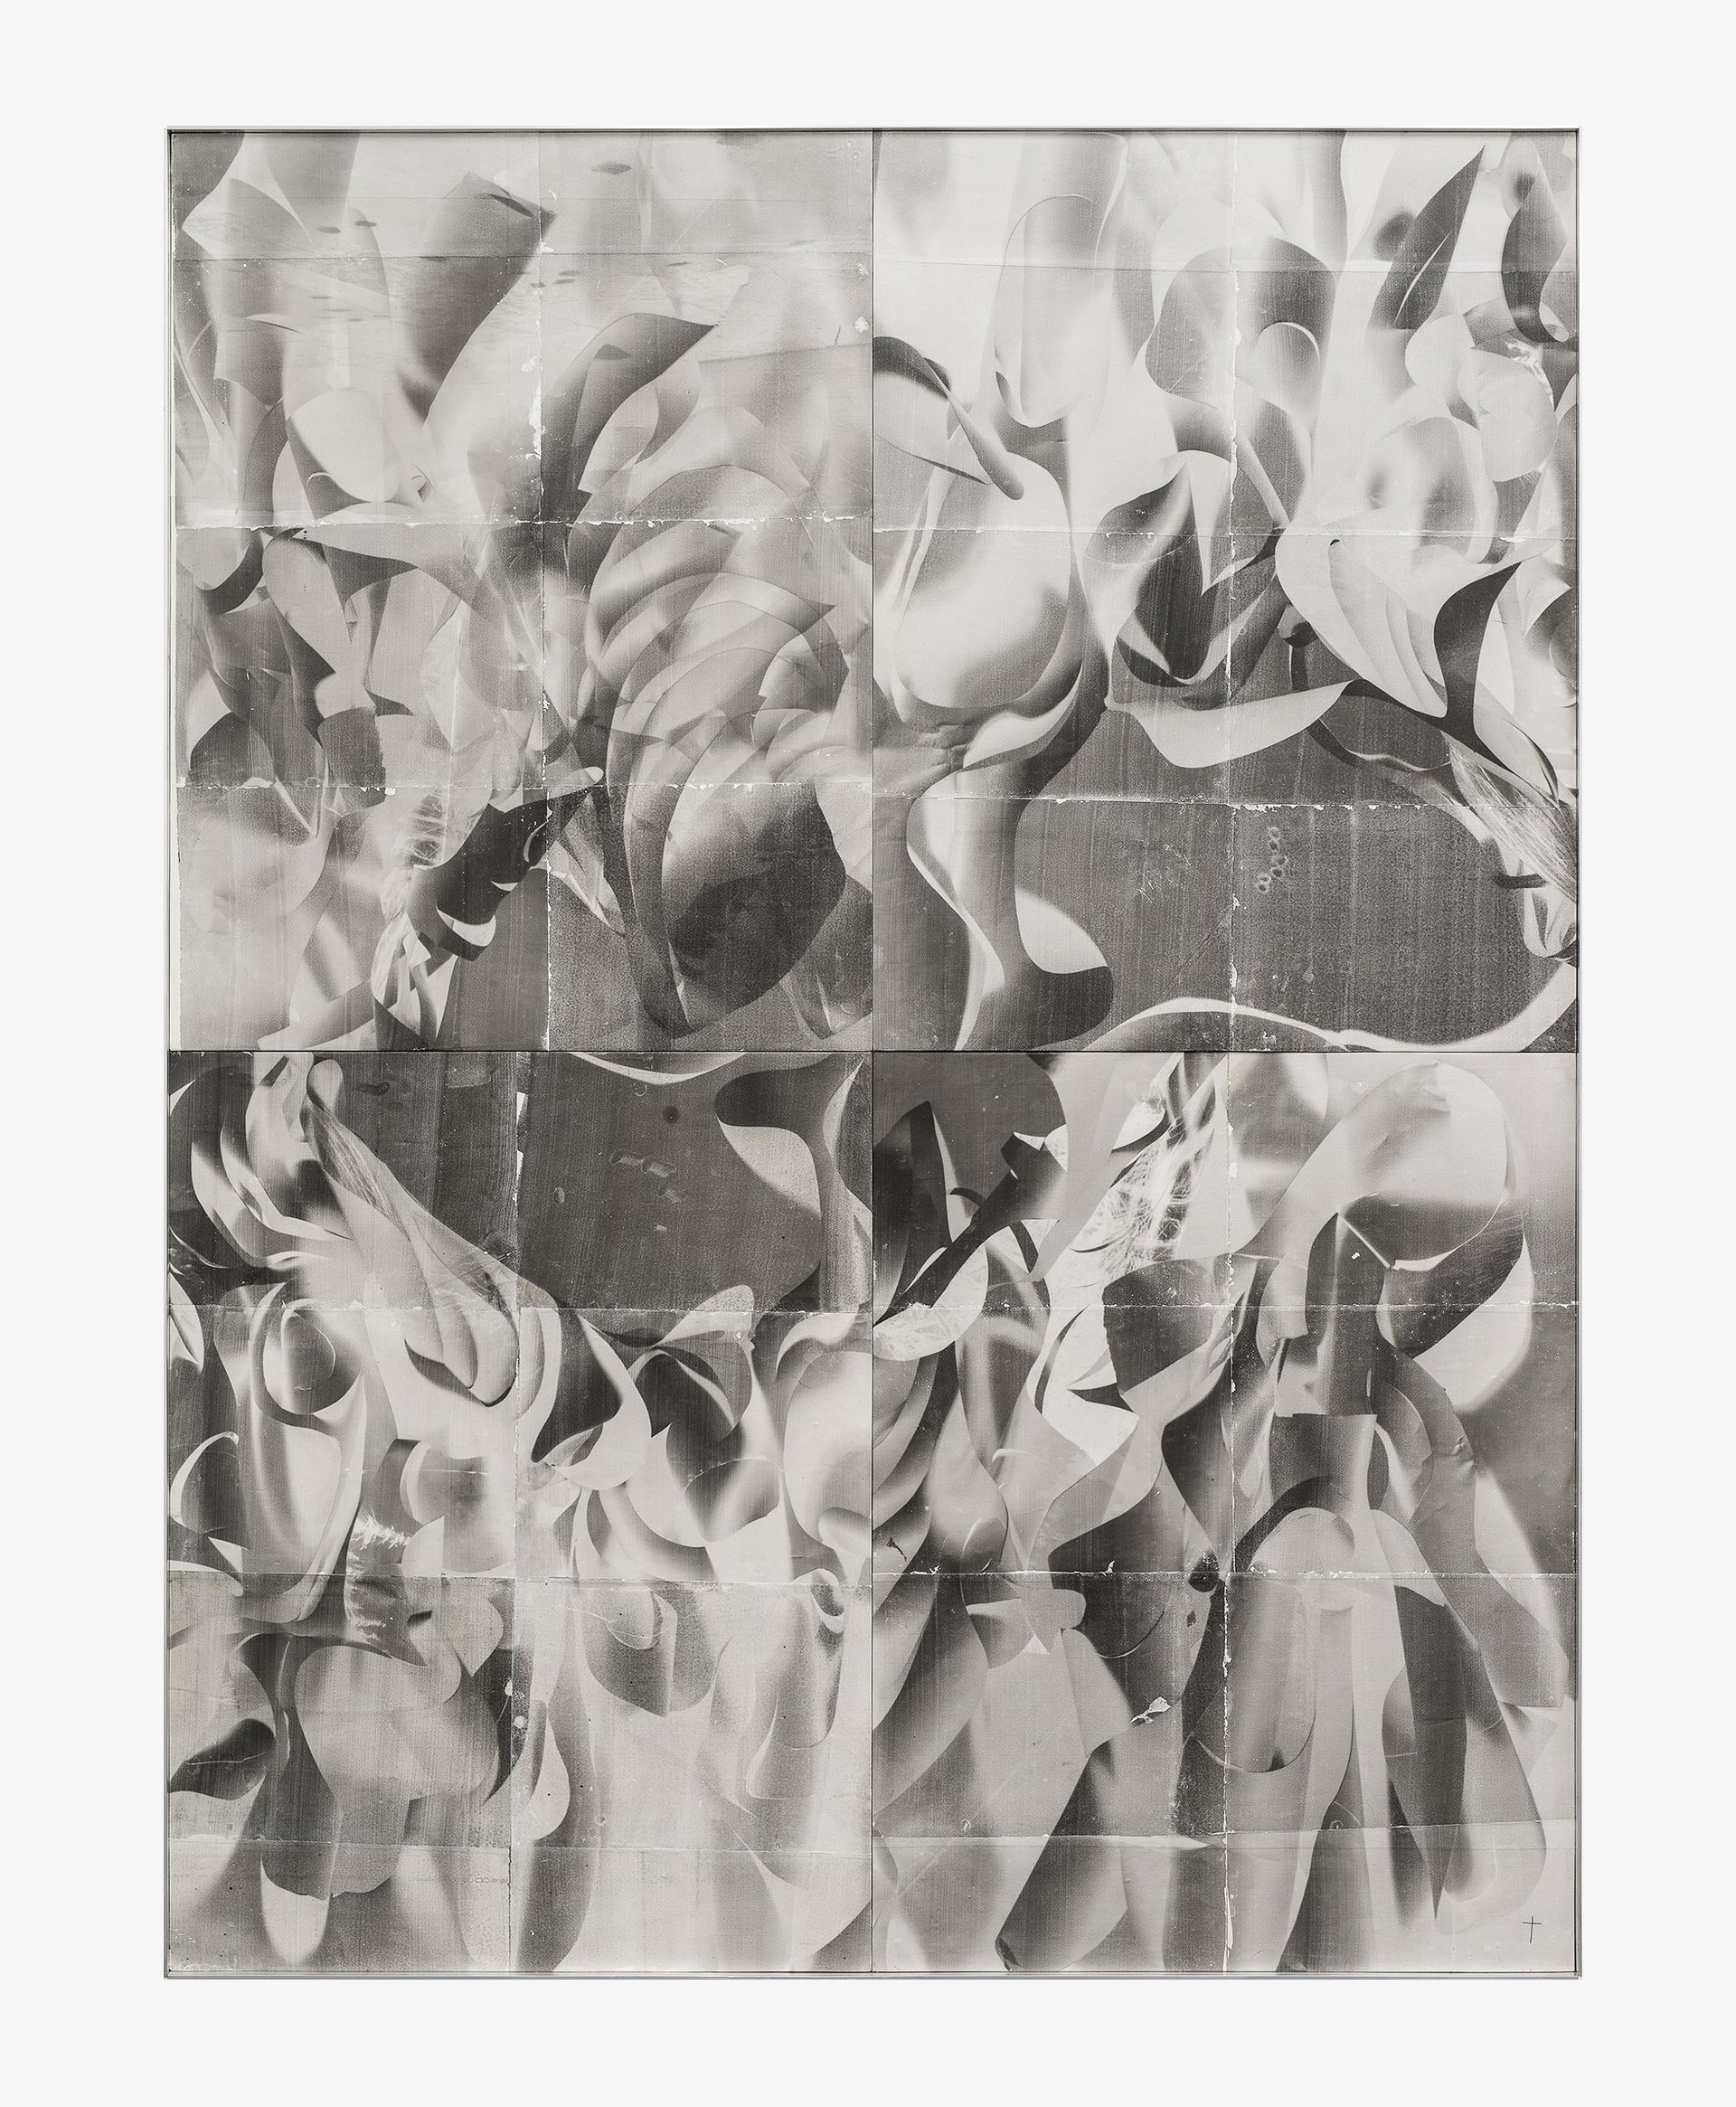 Tillman KaiserUntitled, 2018Black and white photo on paper on wood204 x 154 cm